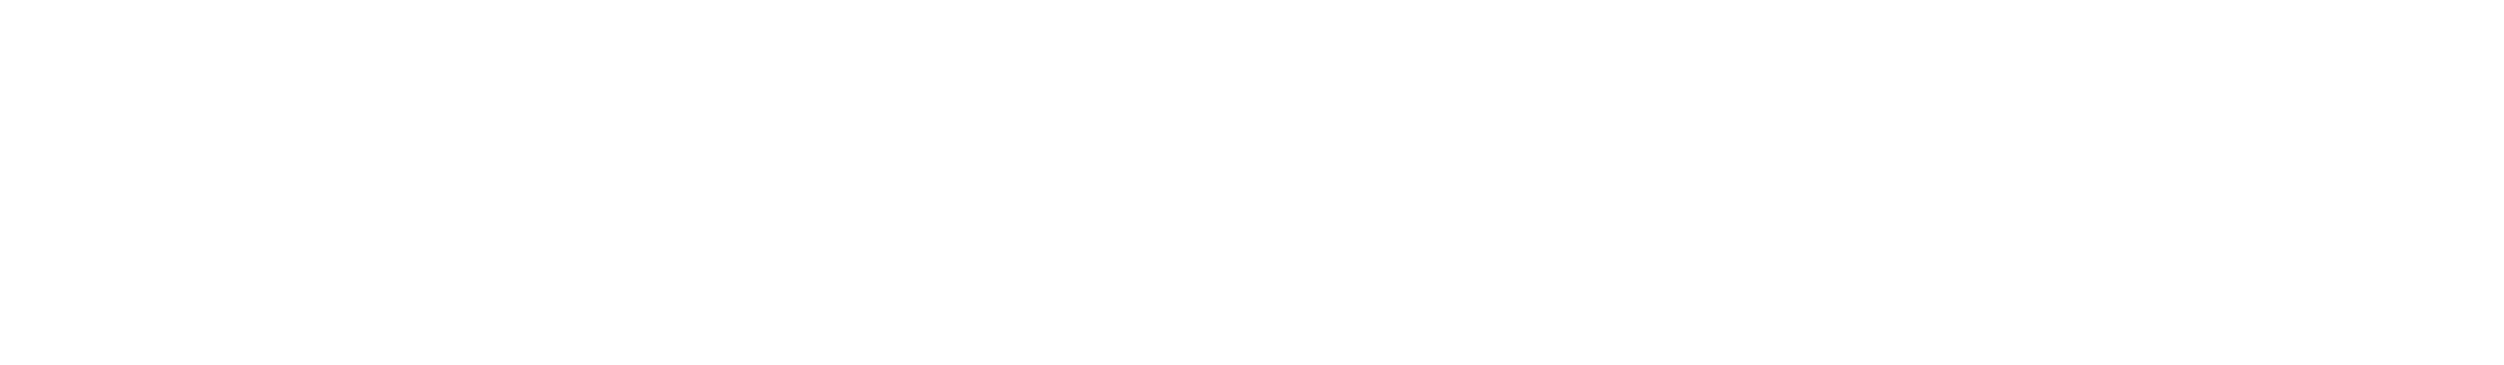 gulf-news-logo-vector